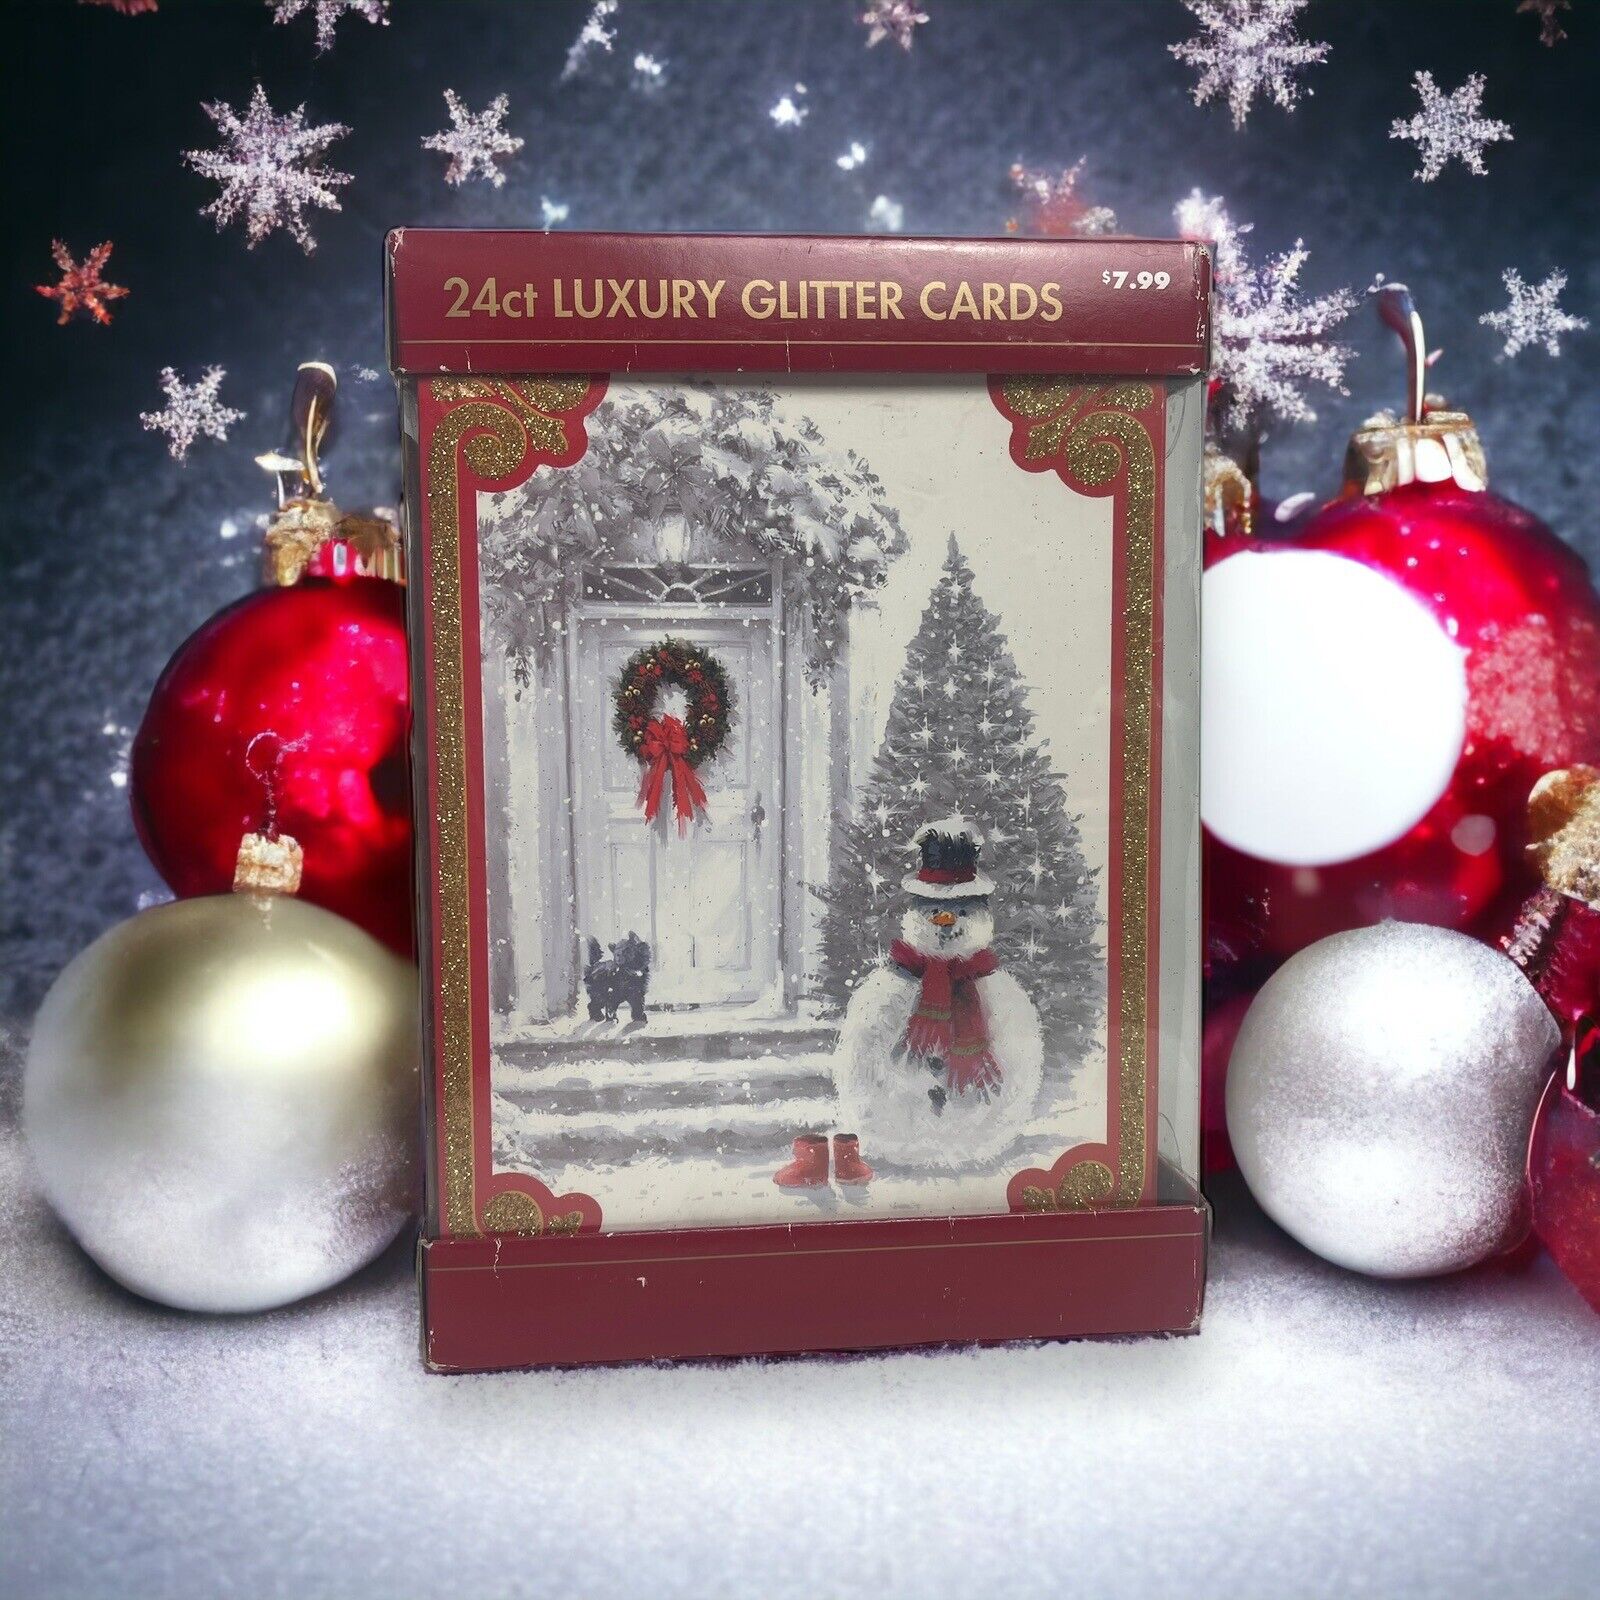 Vintage Kmart 24ct Luxury Glitter Christmas Cards Santa and Snowman